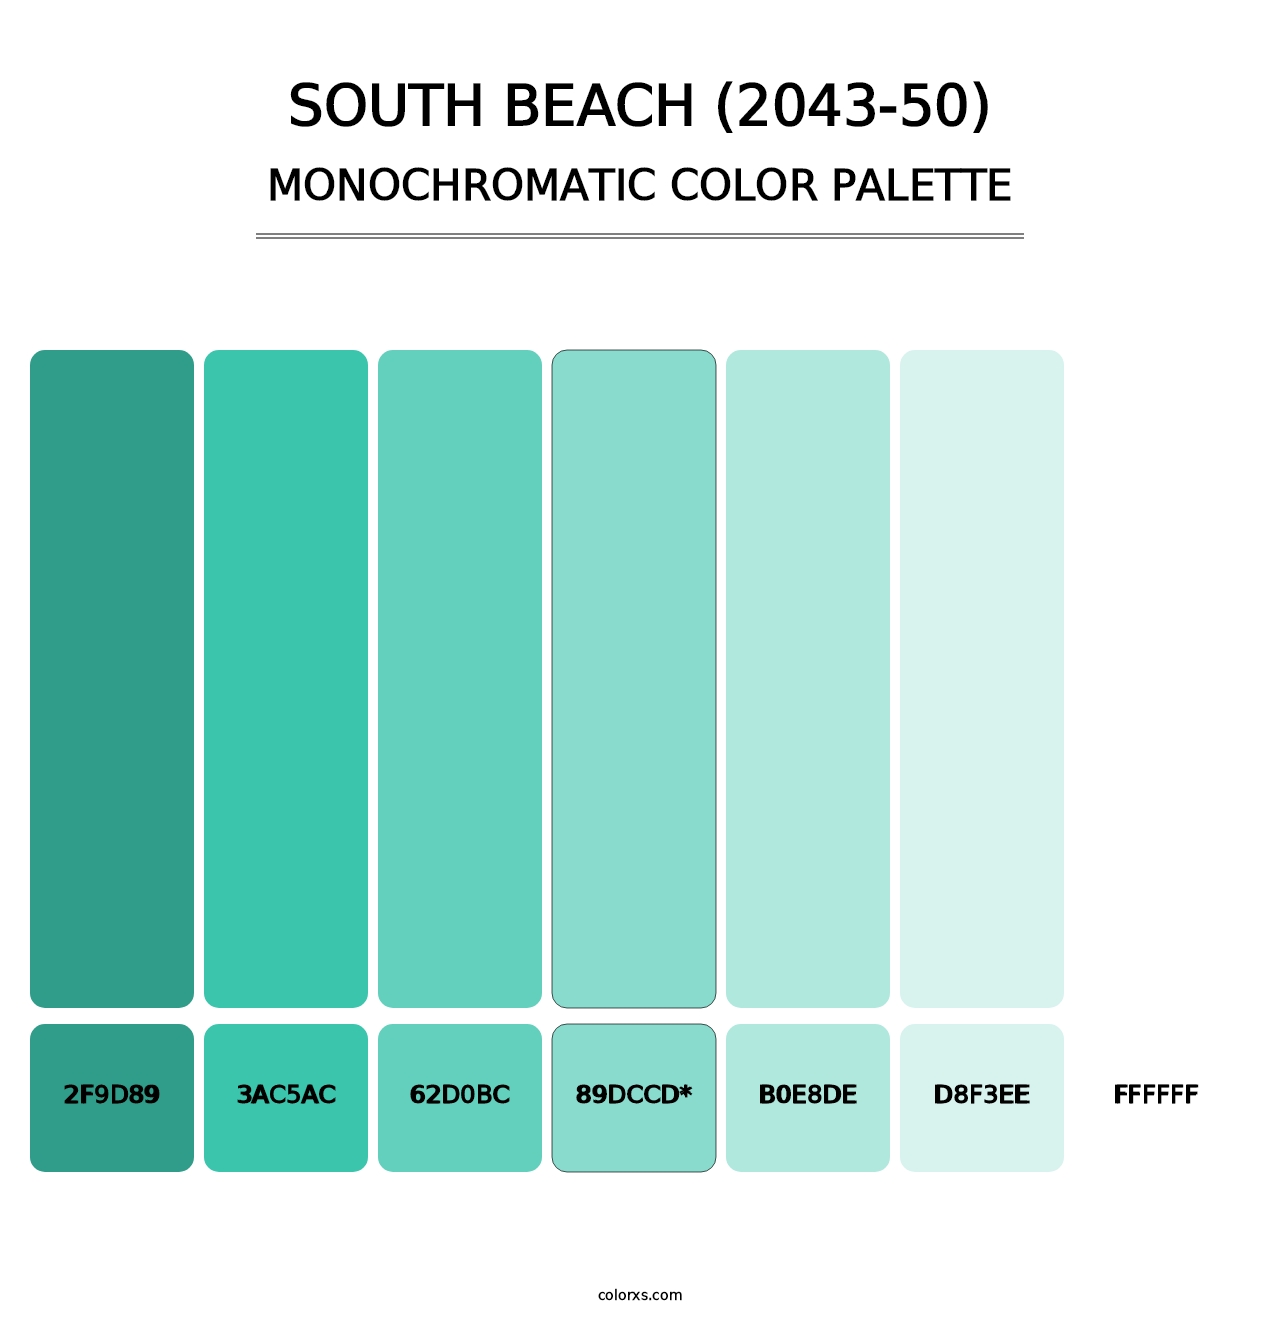 South Beach (2043-50) - Monochromatic Color Palette